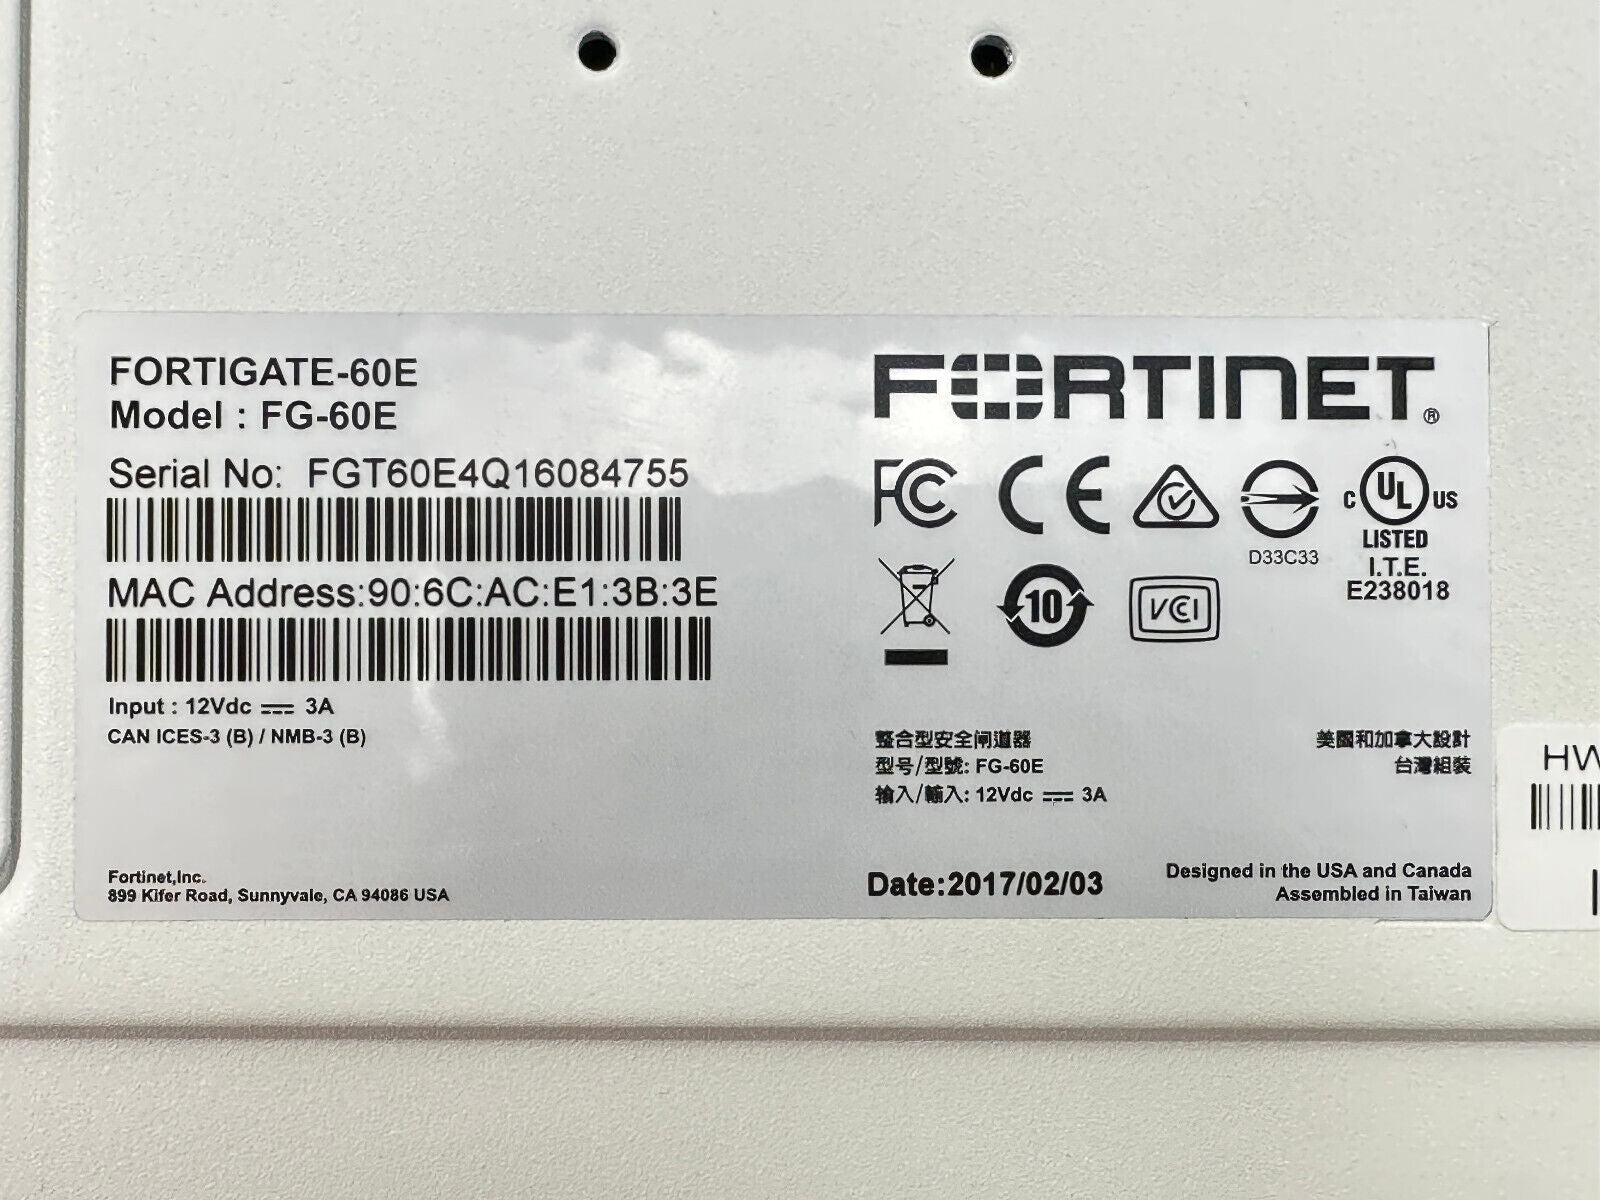 Fortinet FortiGate P18816-01-03 60E Next Generation Security Firewall 10x GE RJ45 WAN DMZ IPS.